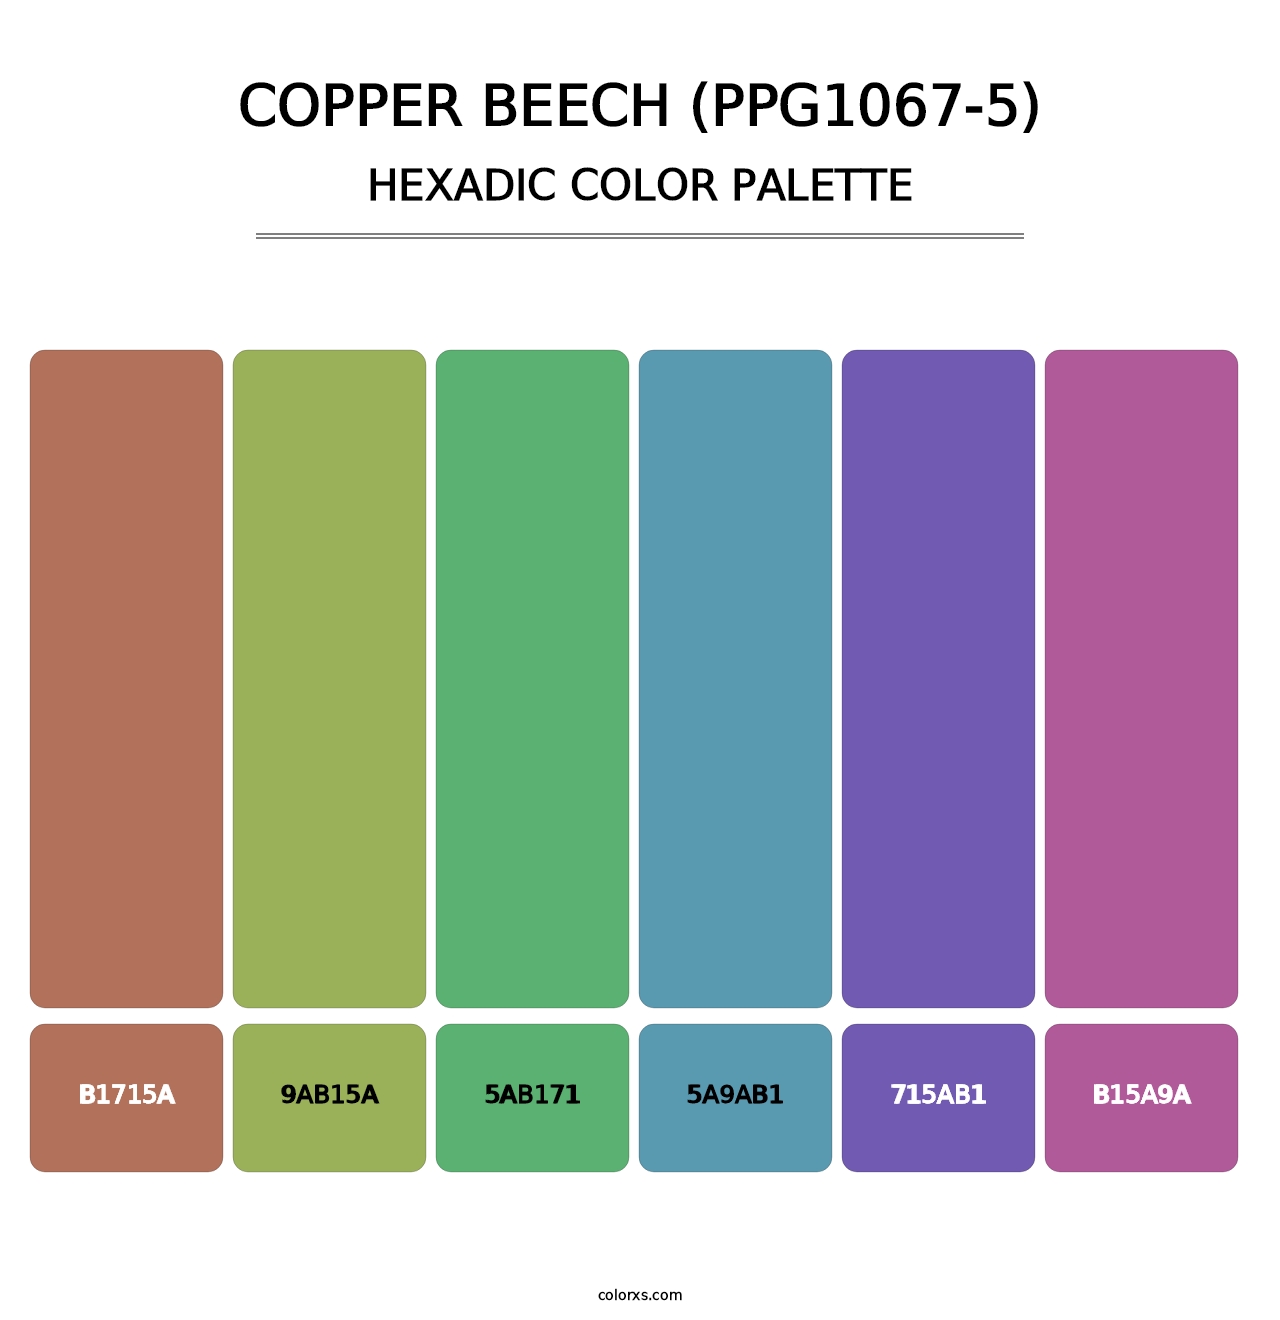 Copper Beech (PPG1067-5) - Hexadic Color Palette